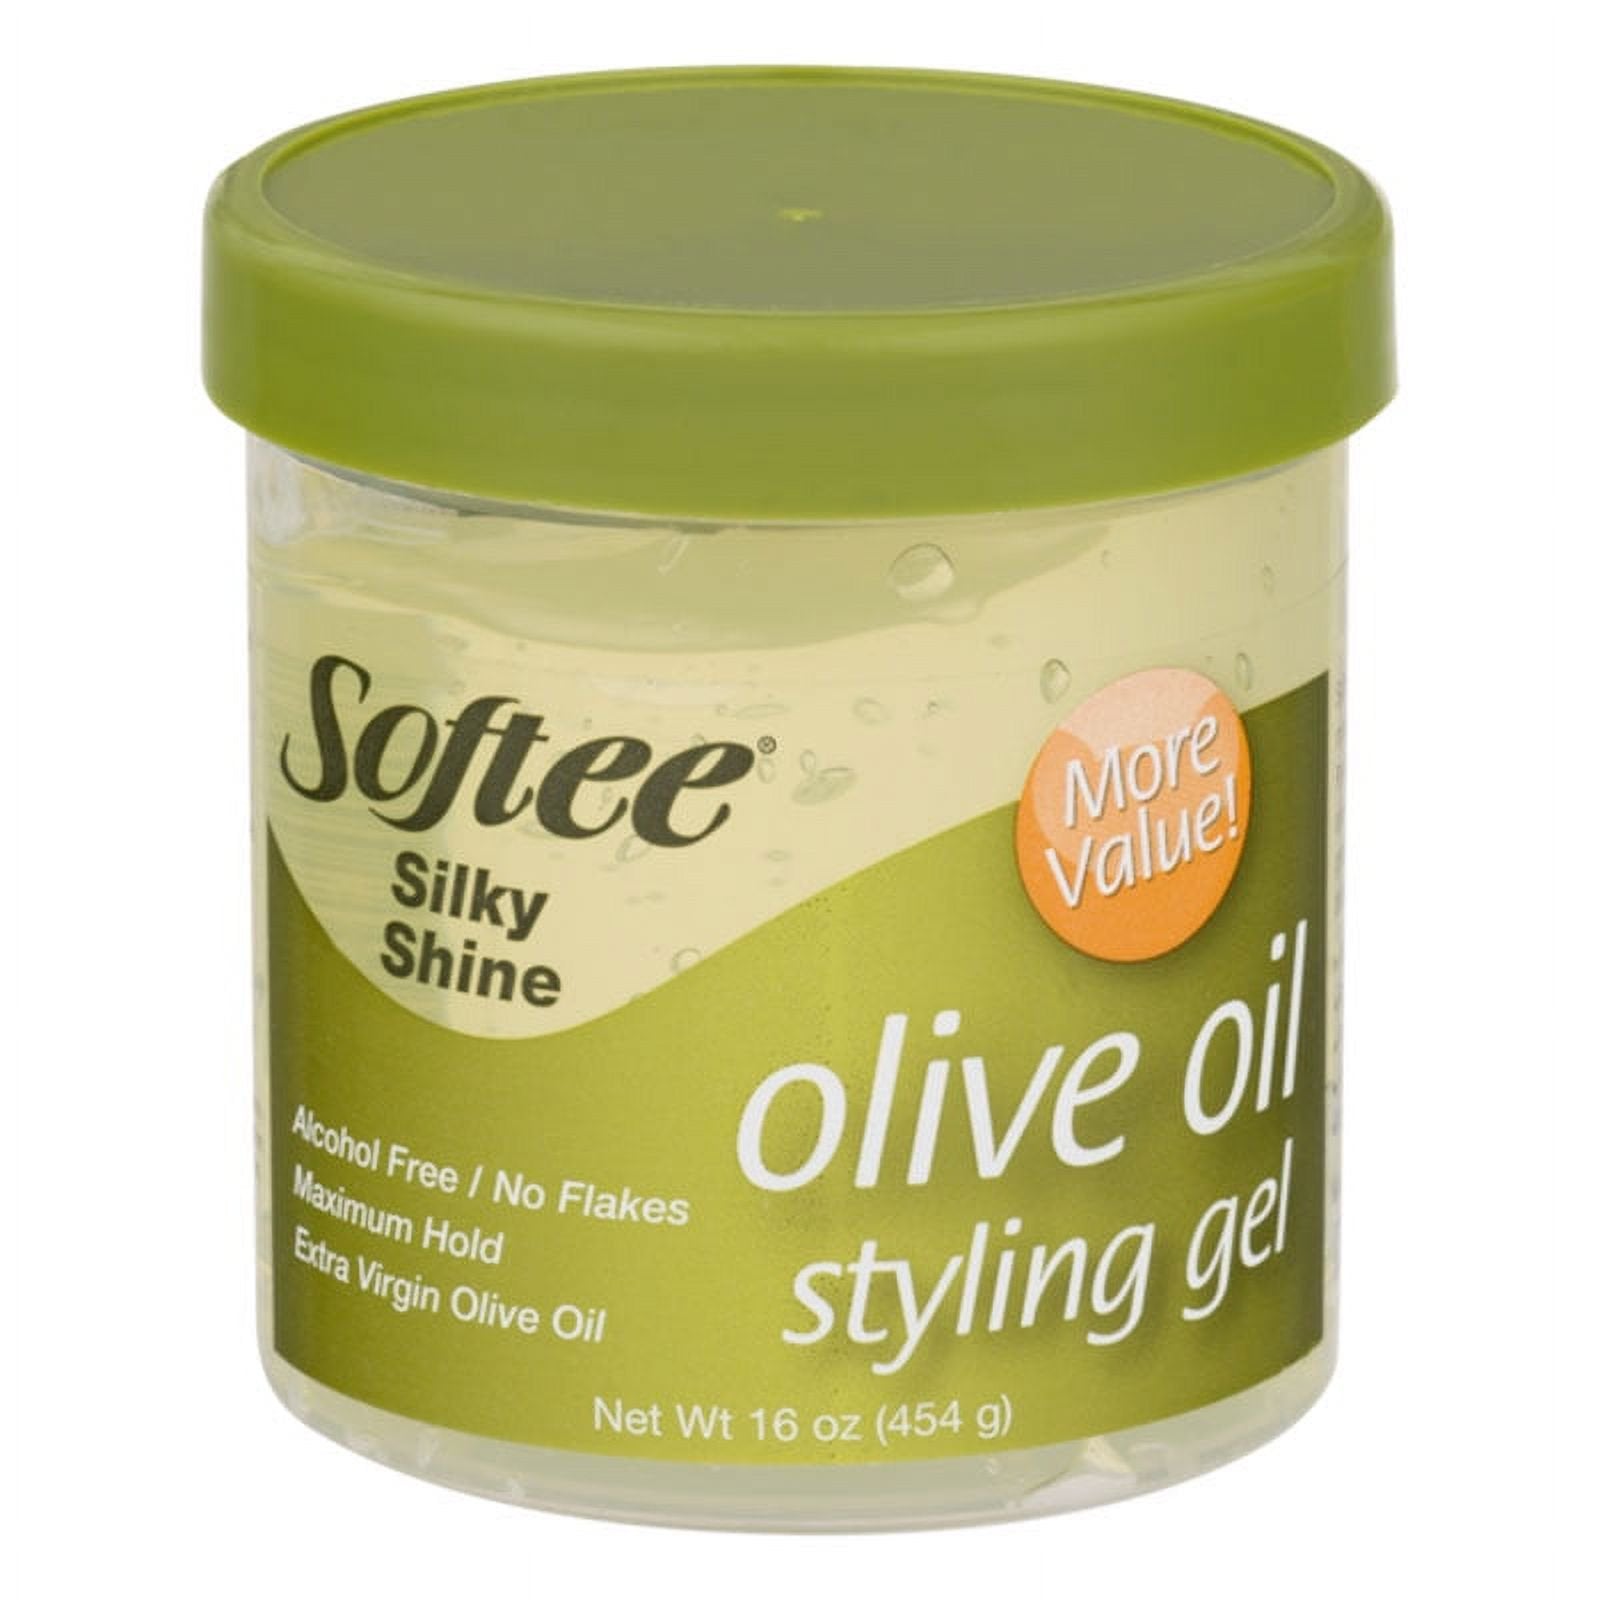 Softee Silky Shine Olive Oil Styling Gel